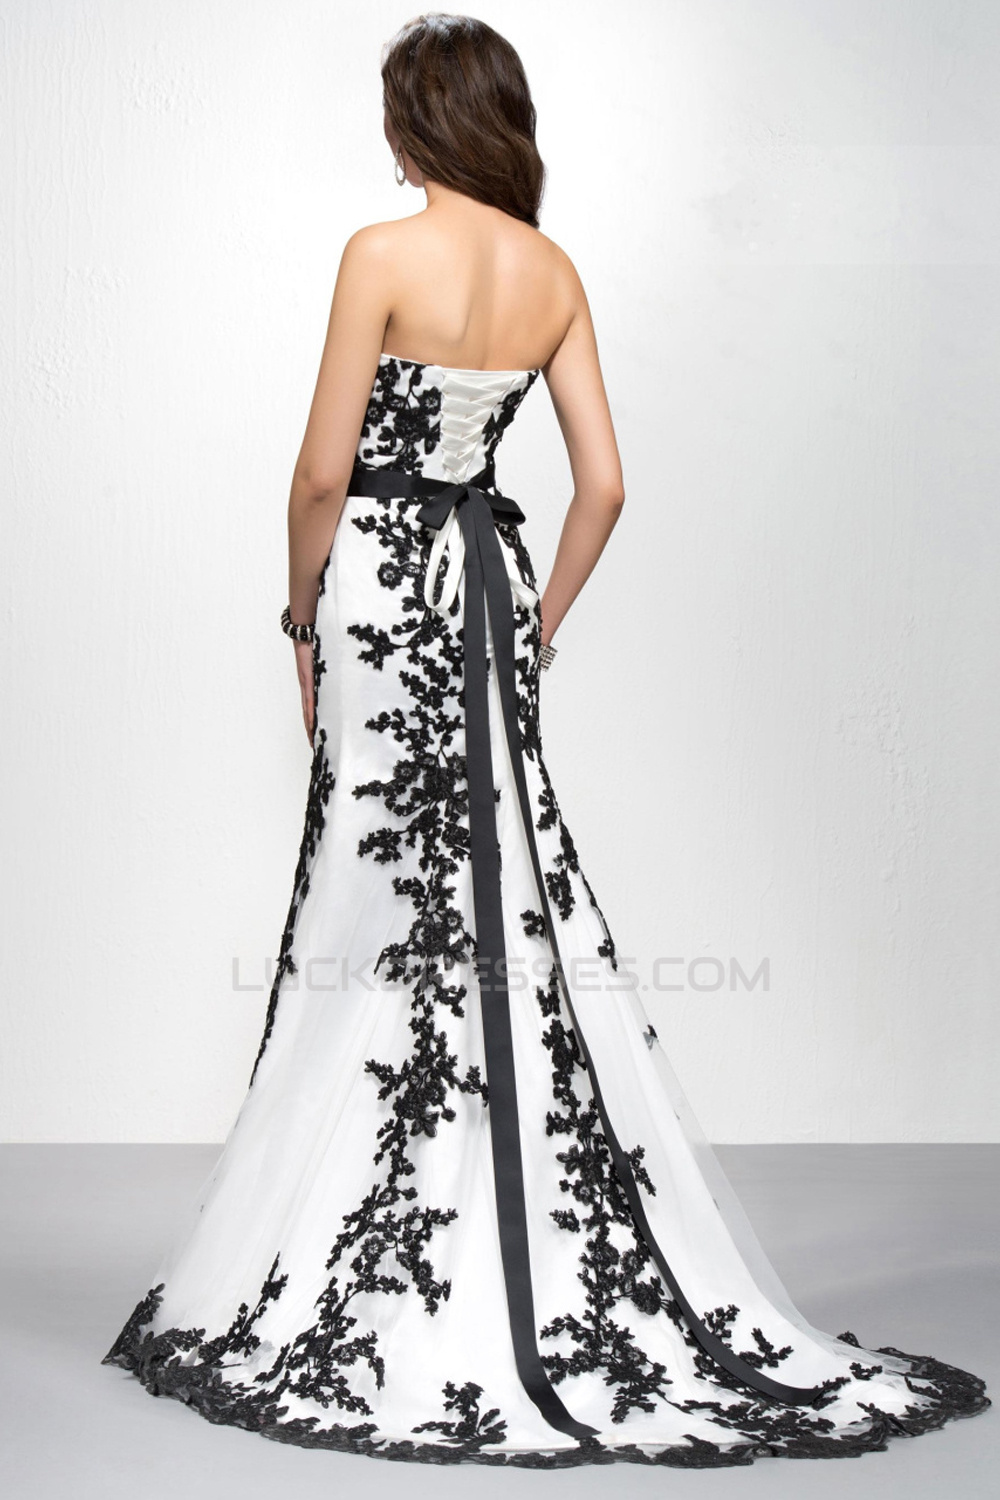 black and white dresses for weddings